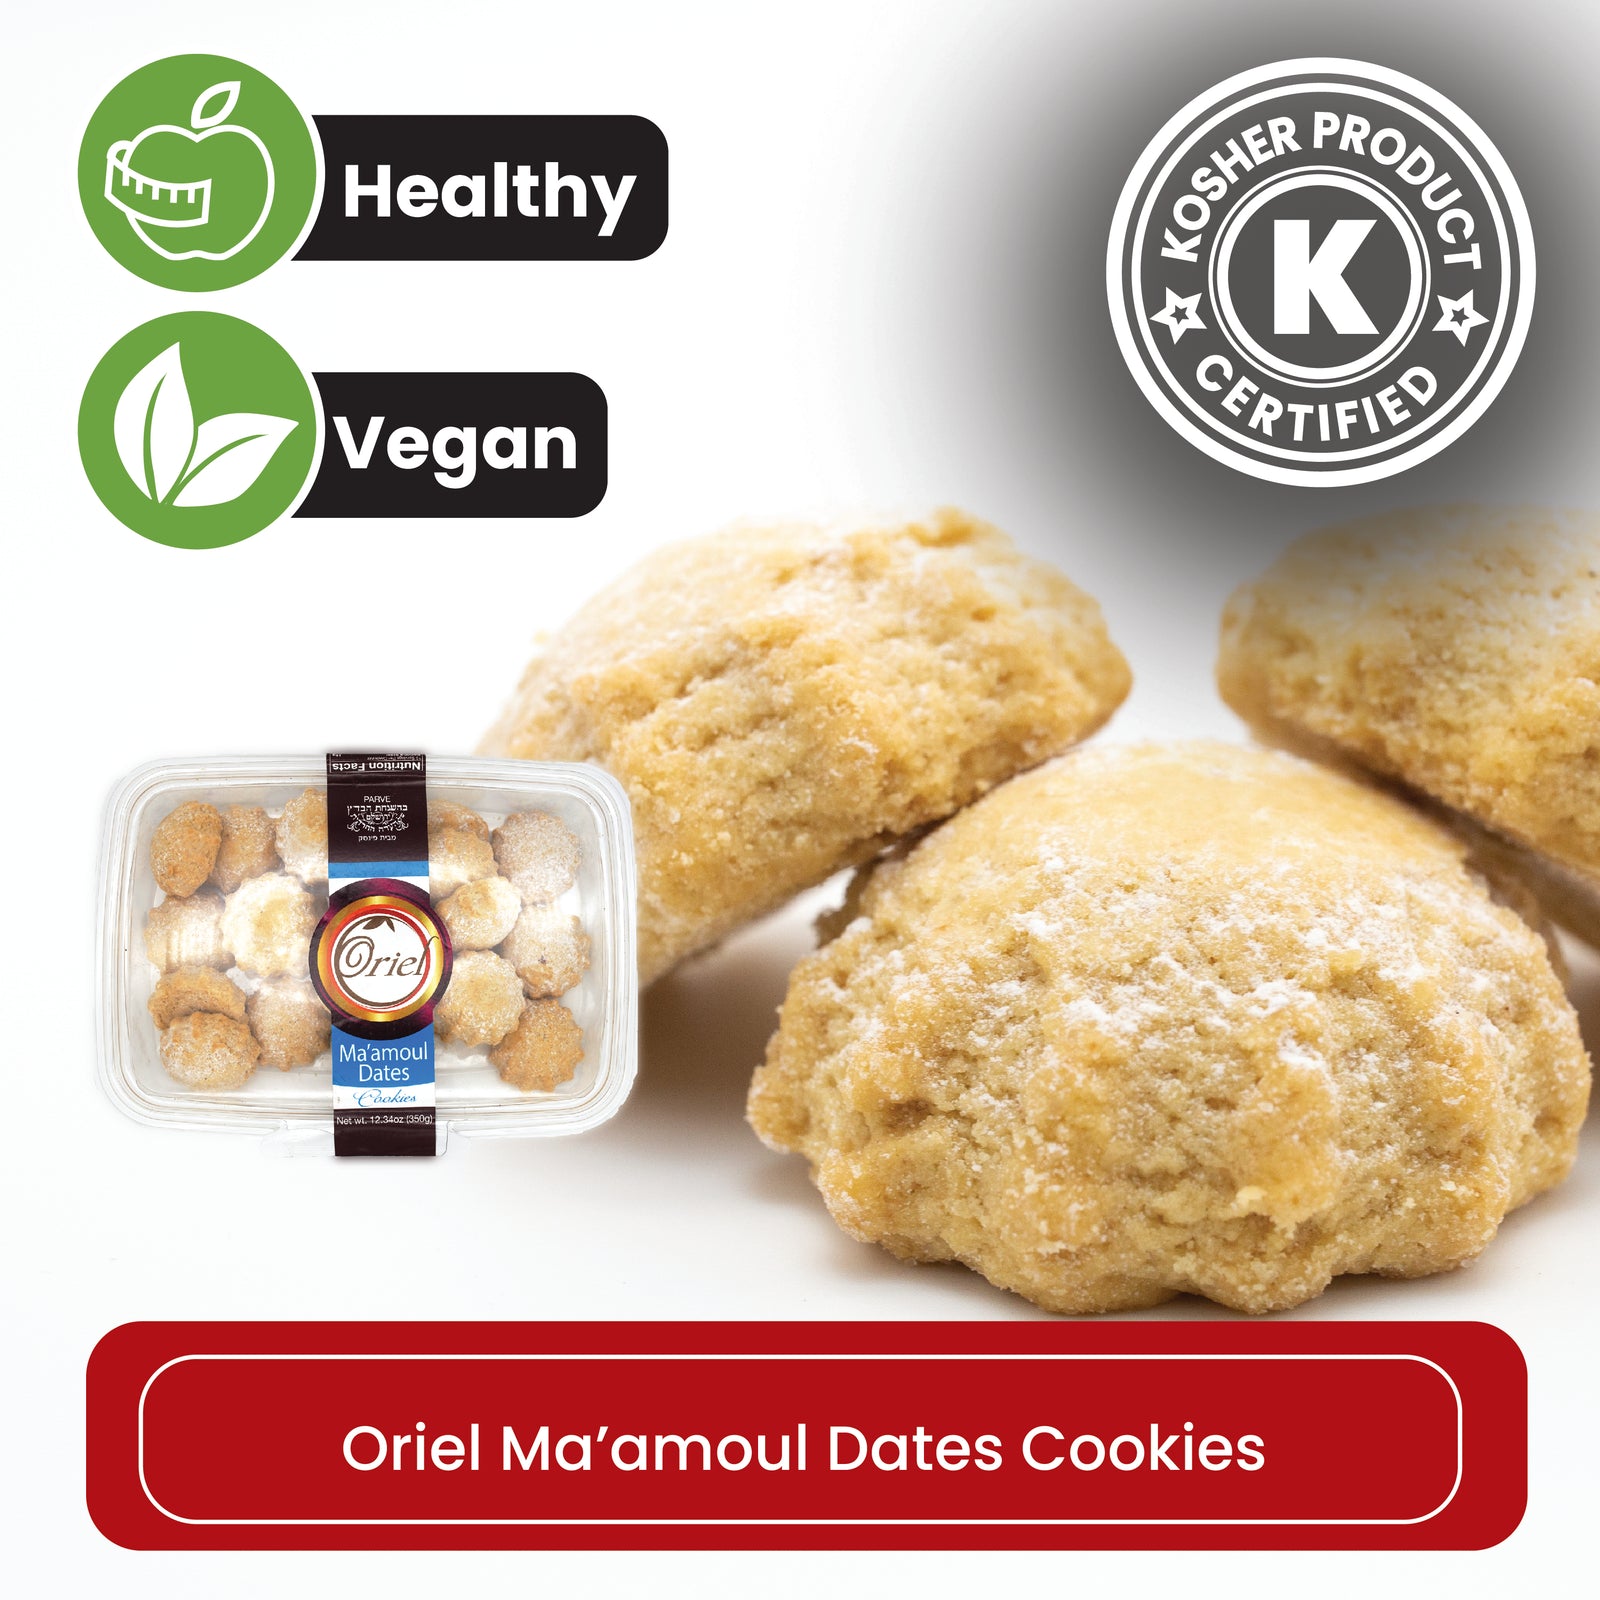 Oriel Ma'amoul Dates Cookies